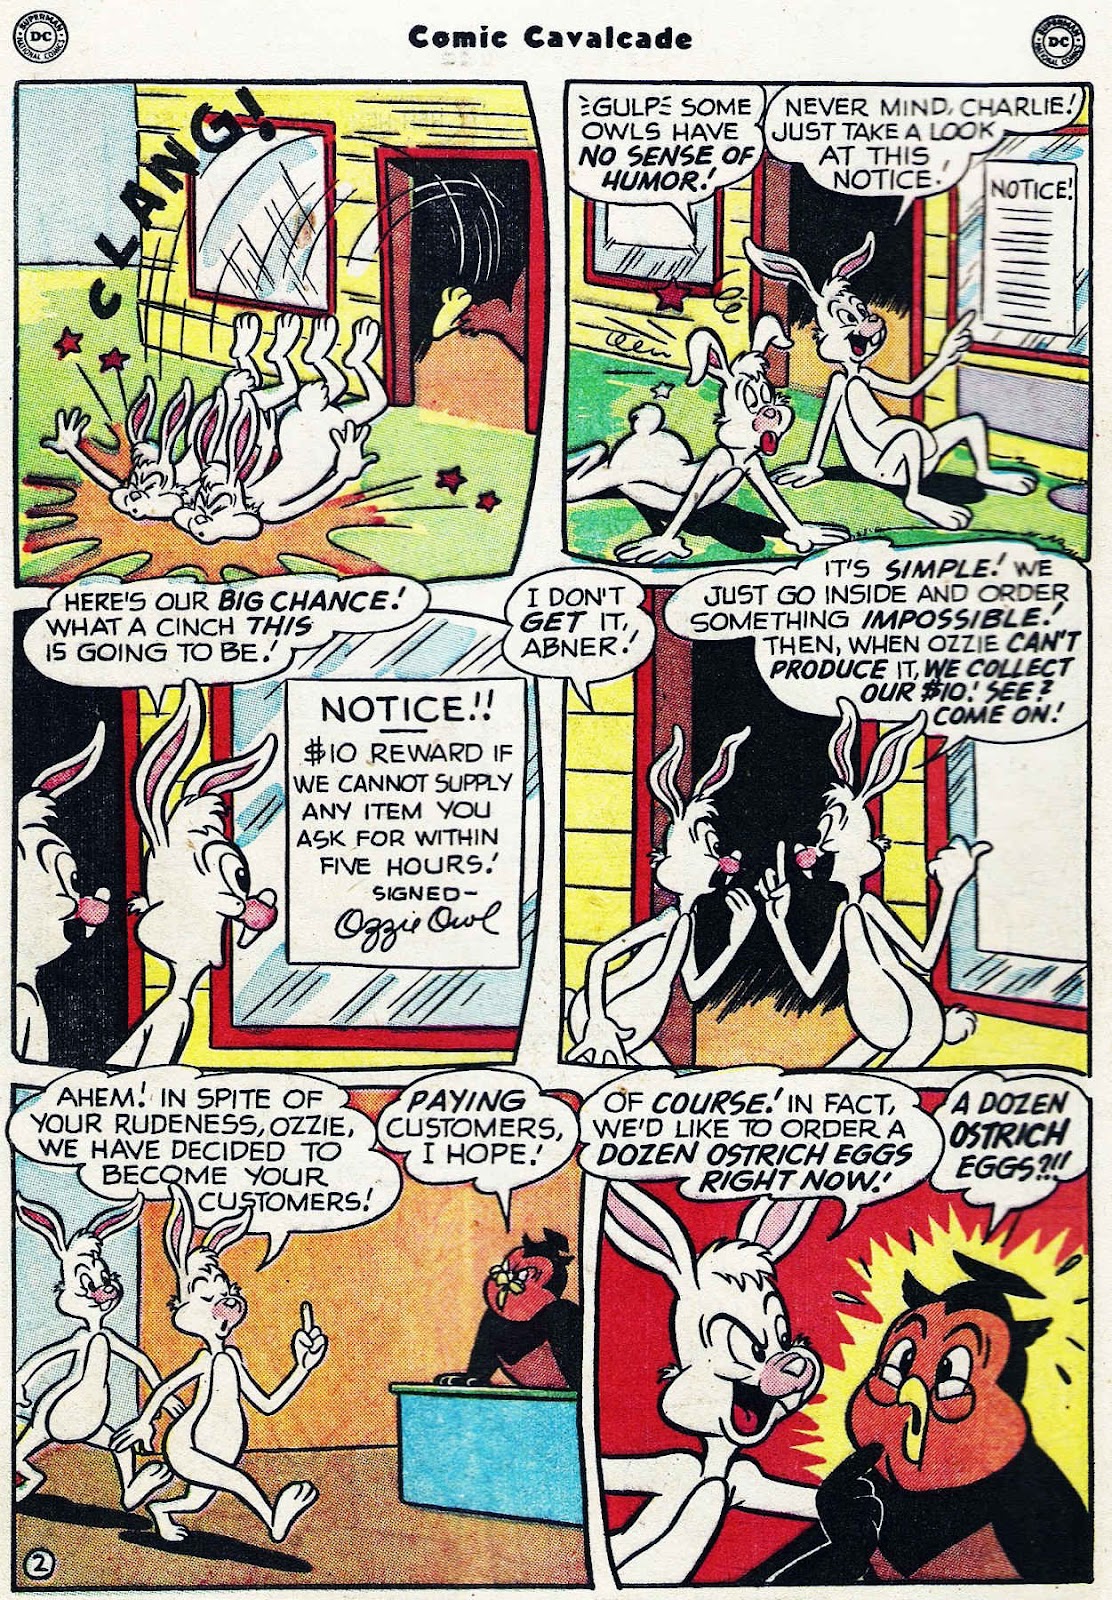 Comic Cavalcade issue 37 - Page 42